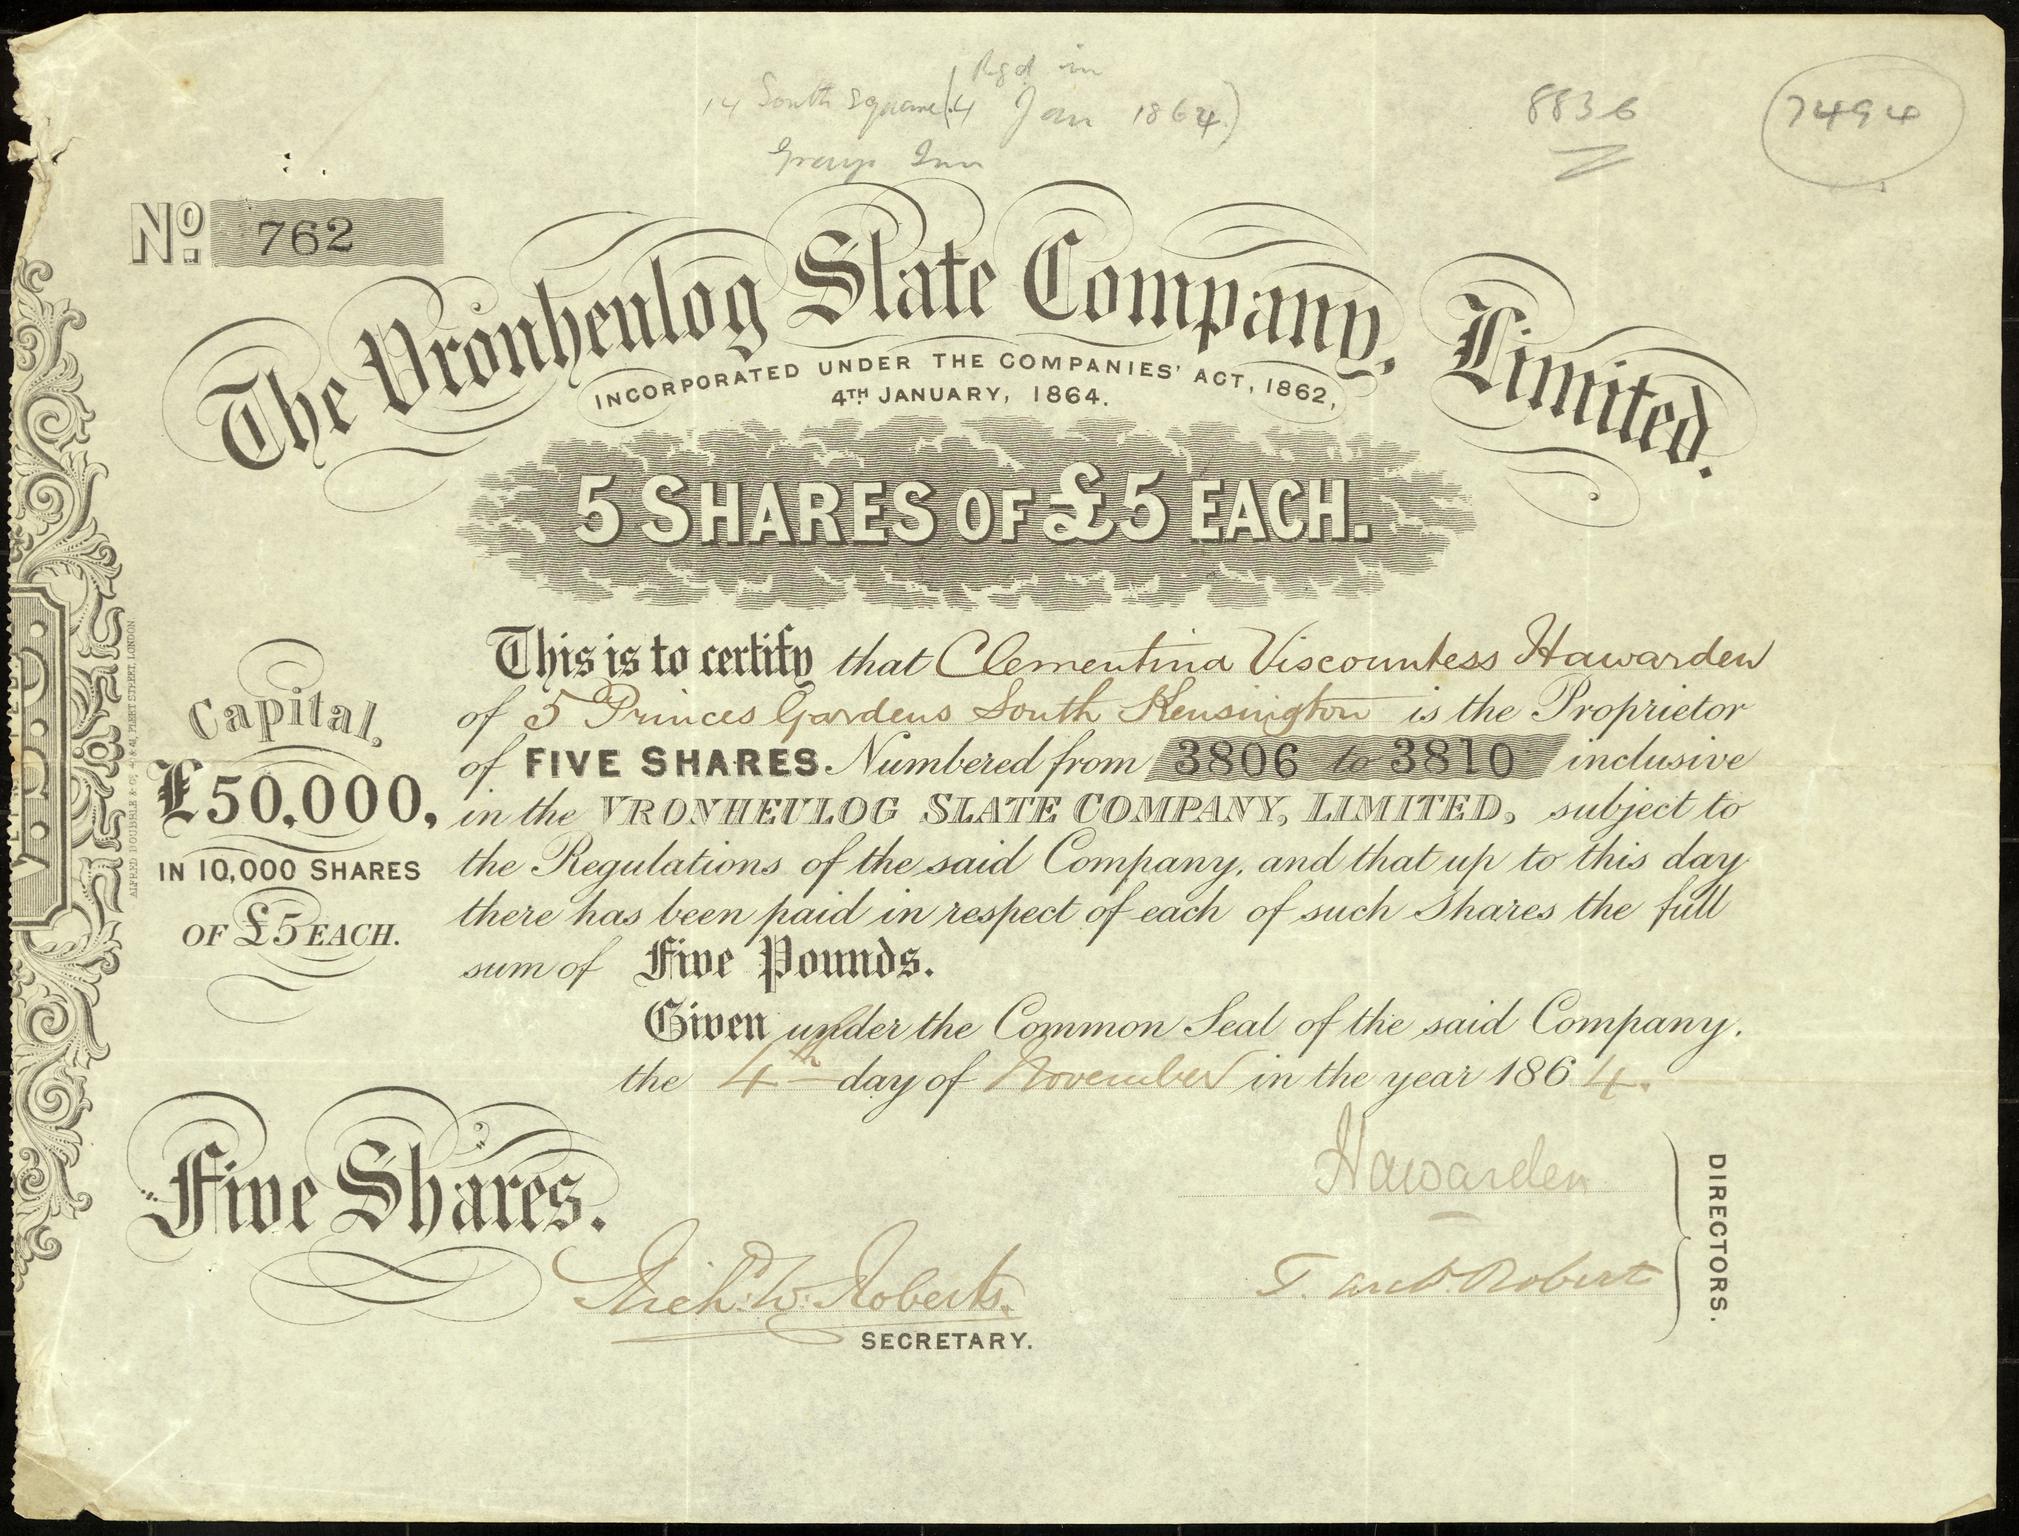 Vronheulog Slate Co. Ltd, share certificate